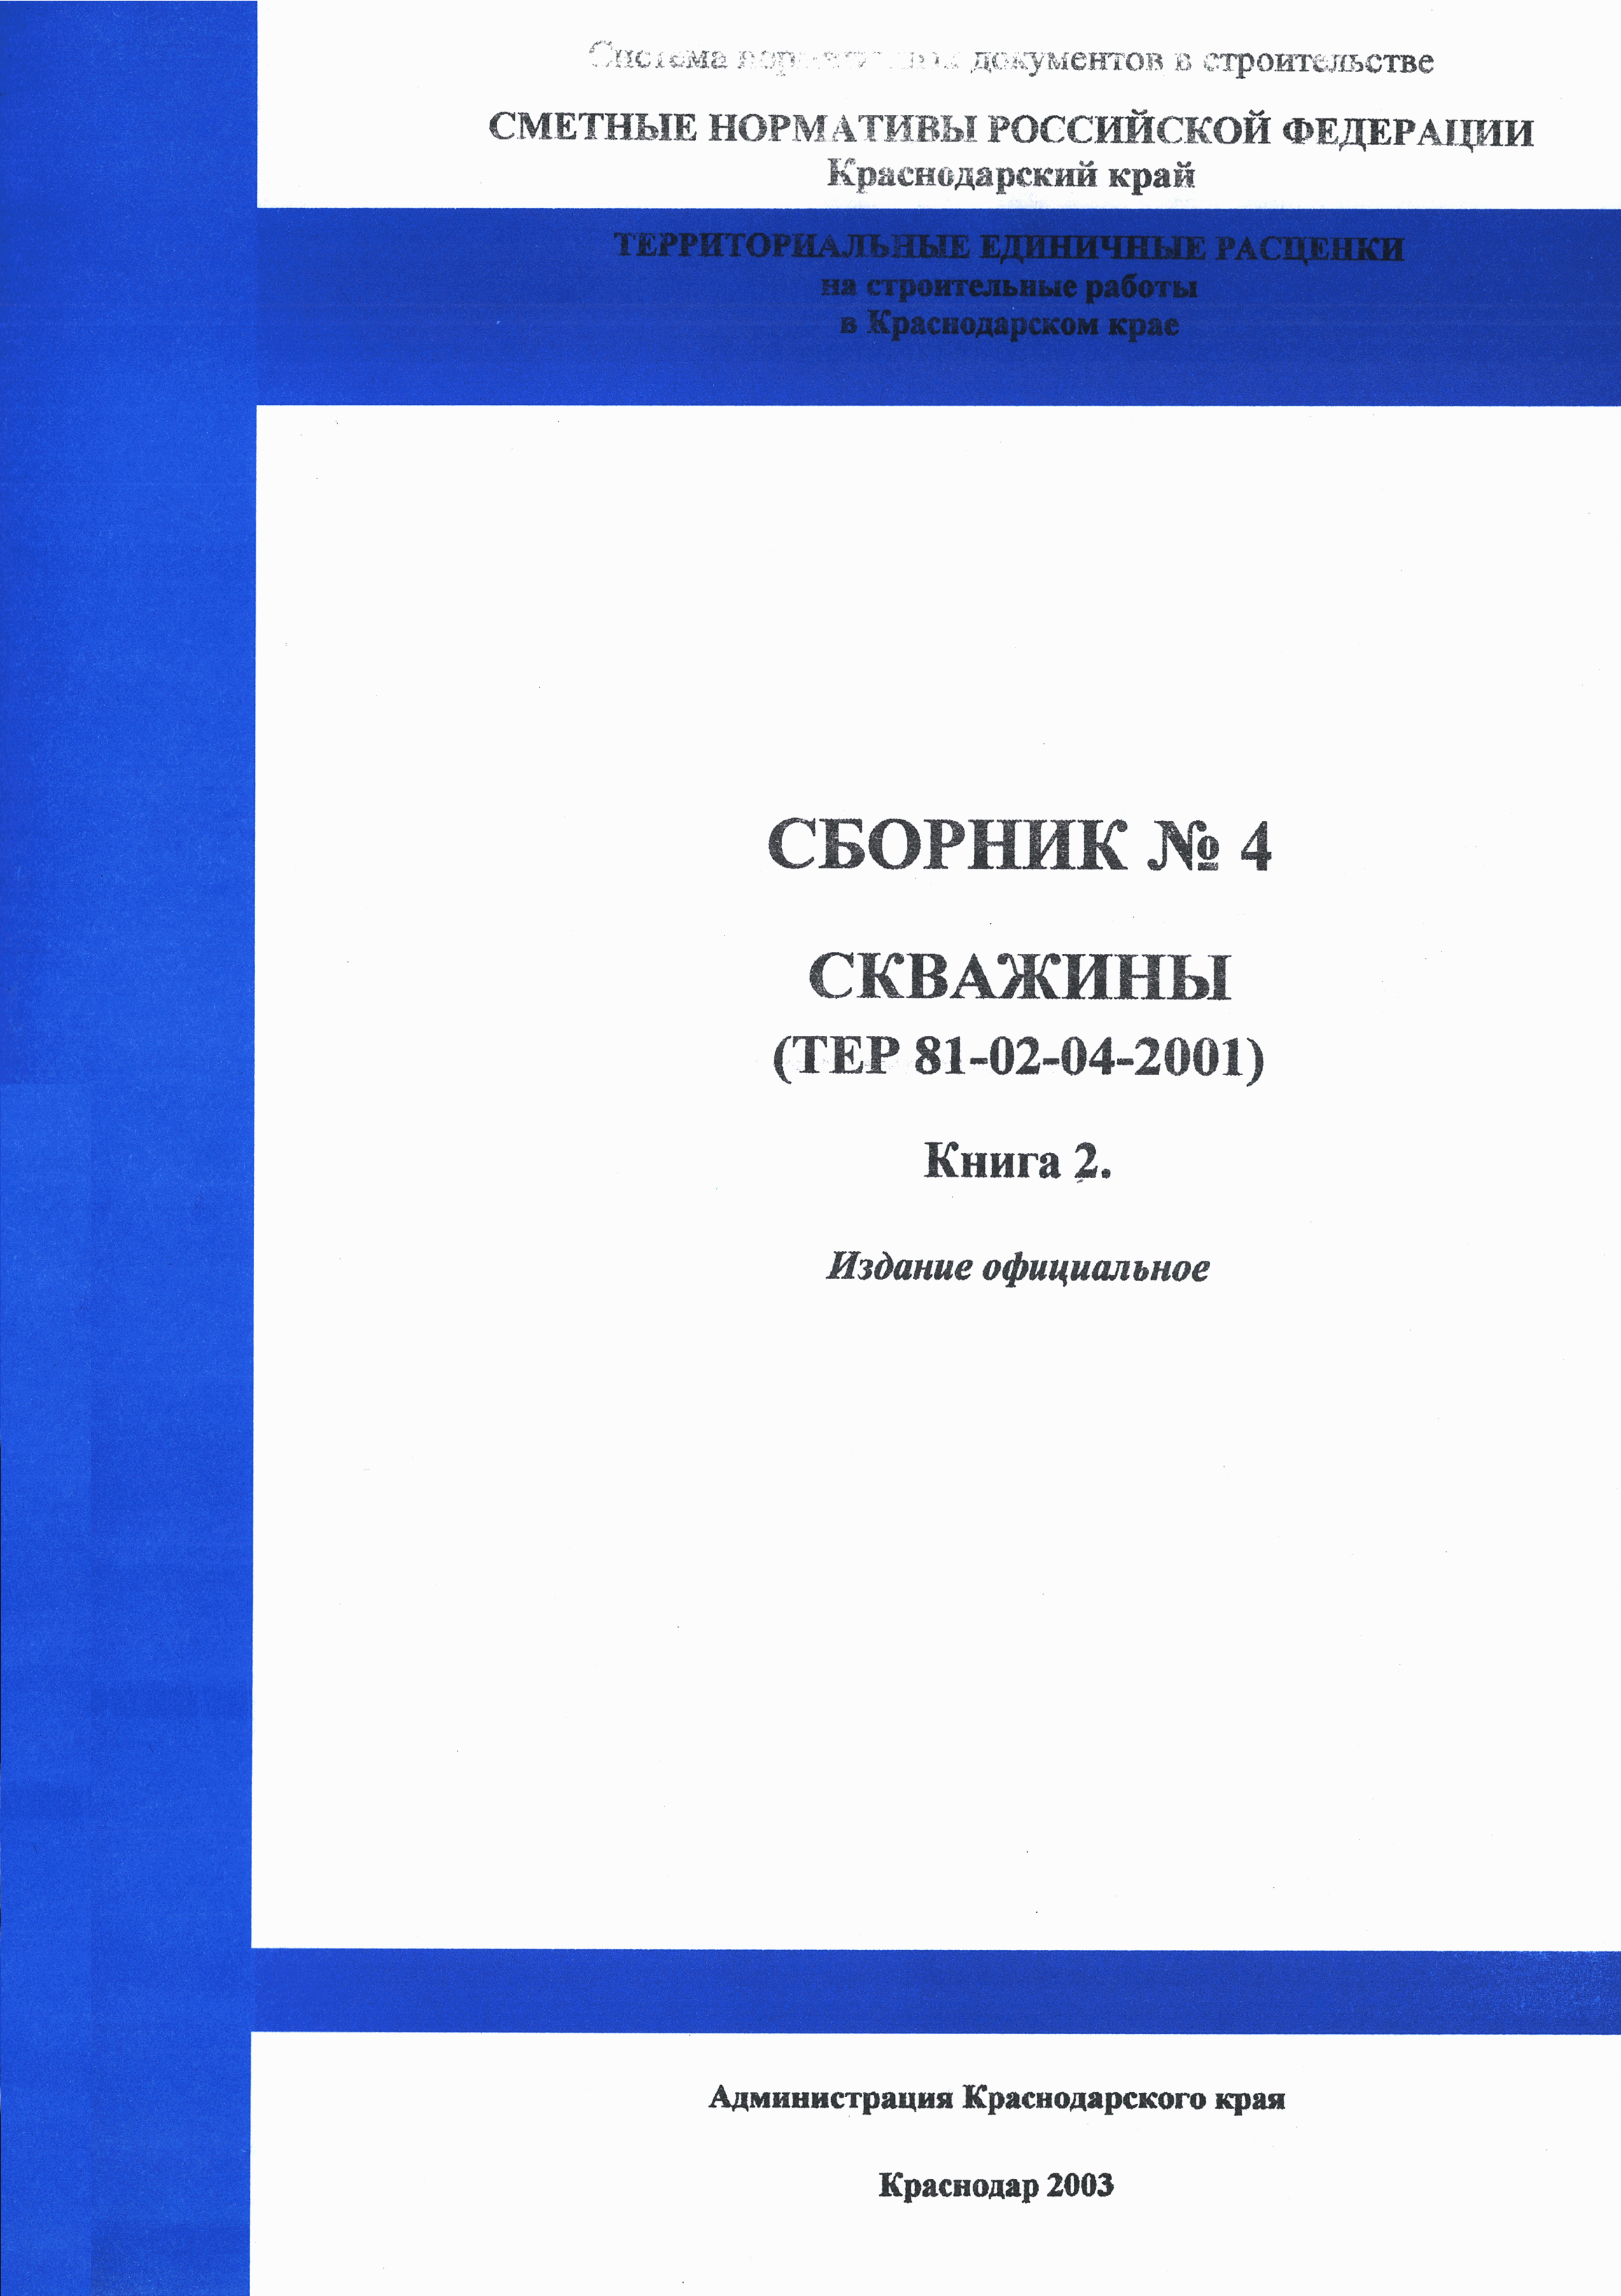 ТЕР Краснодарского края 2001-04